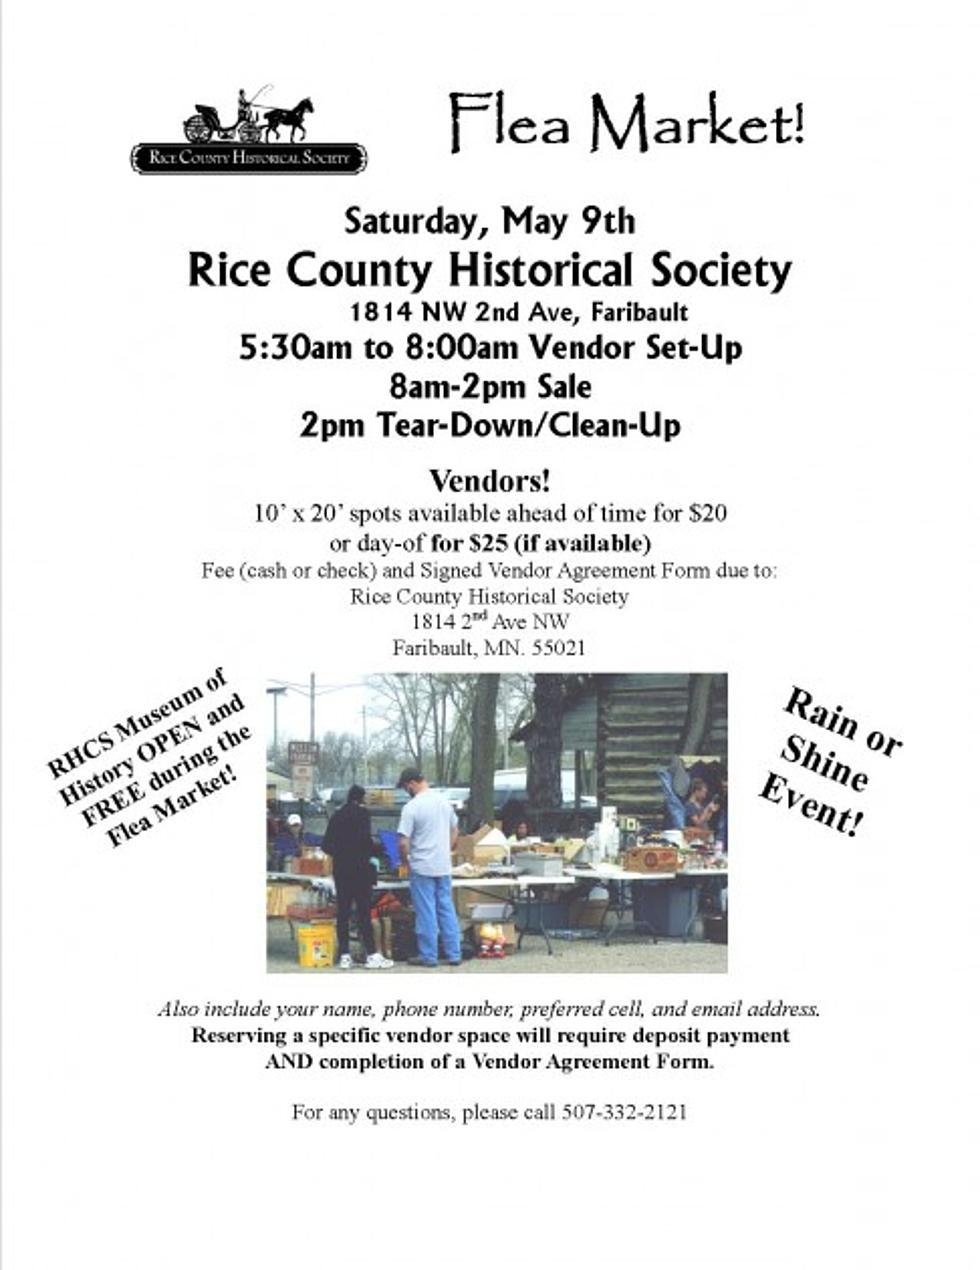 Rice County Historical Society Spring Flea Market